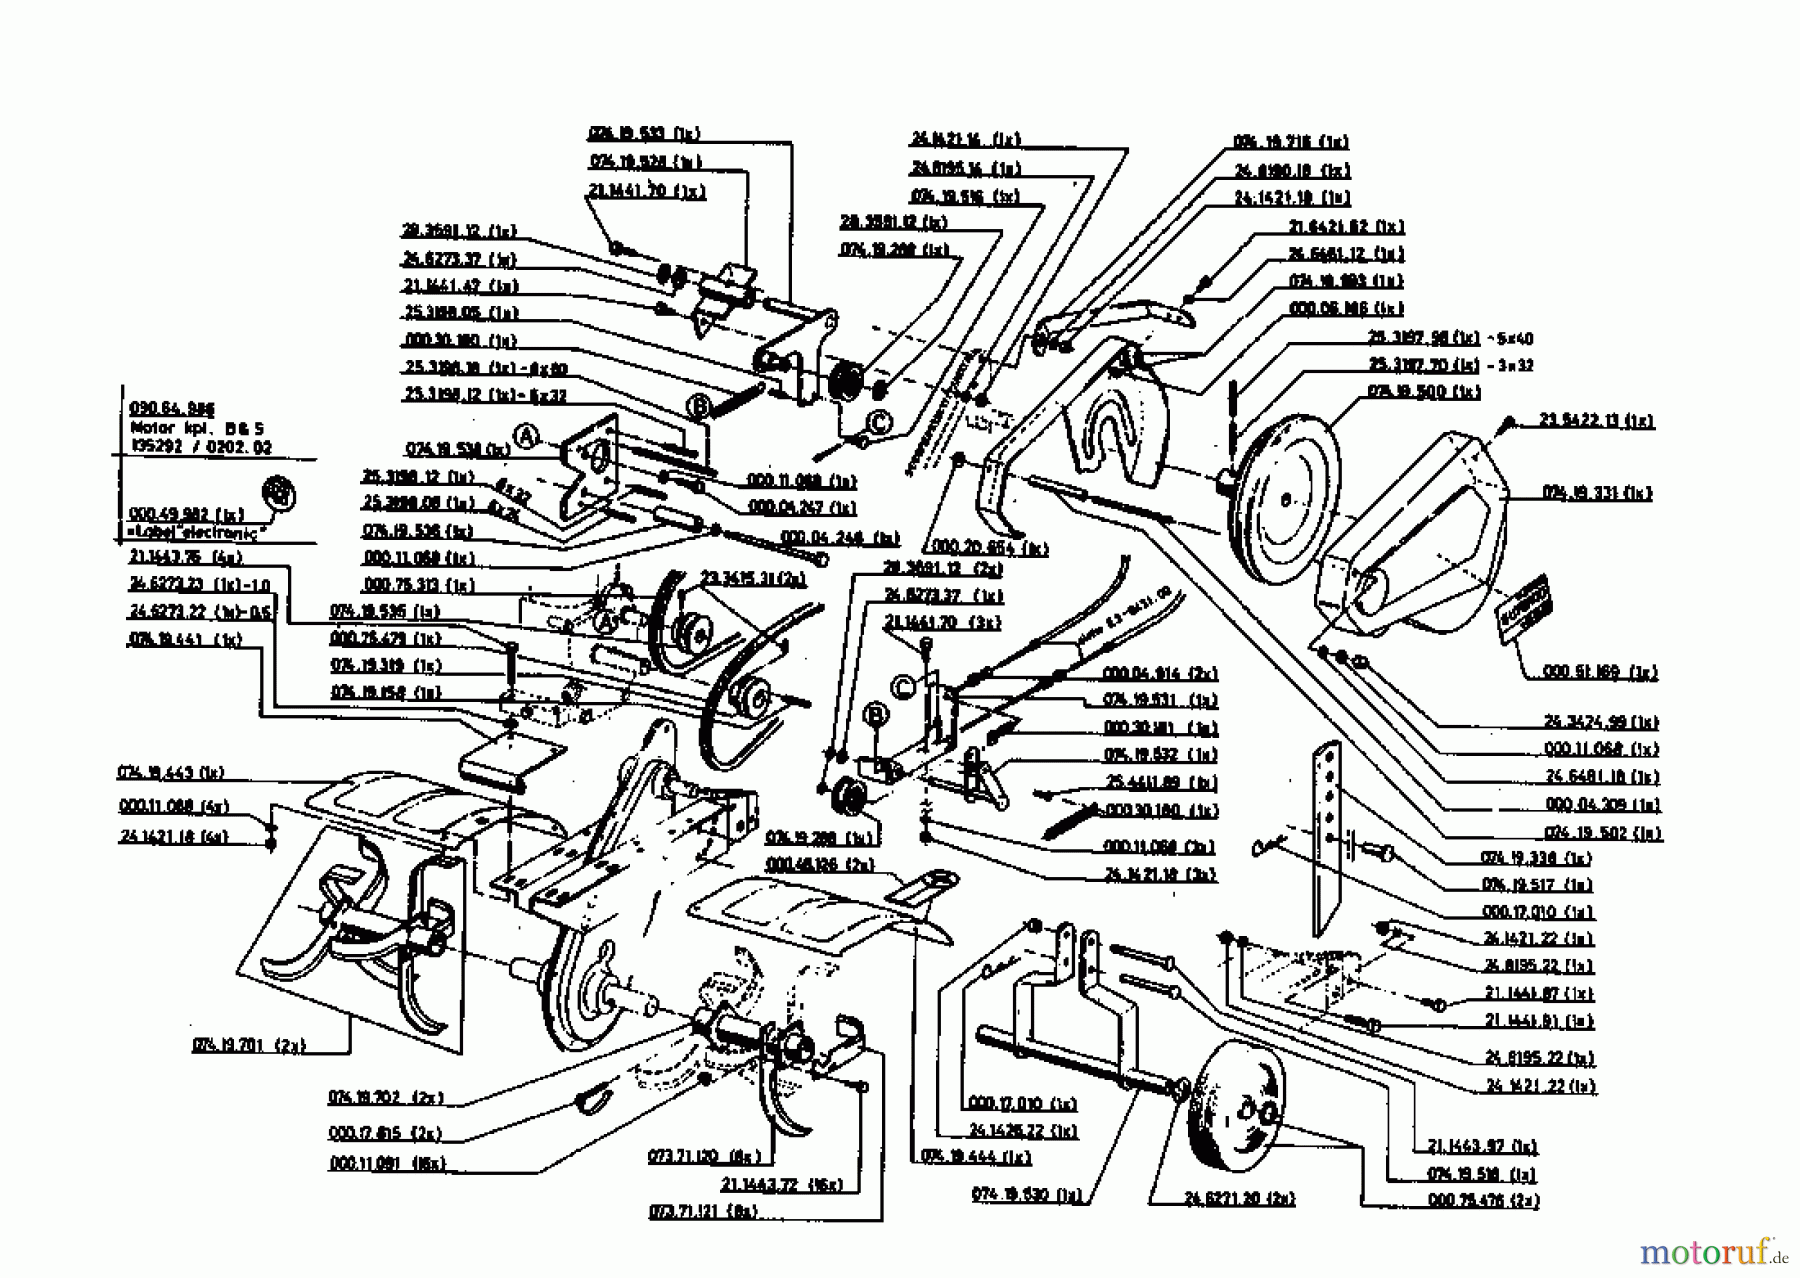  Gutbrod Tillers MB 62-52 07518.02  (1994) Basic machine